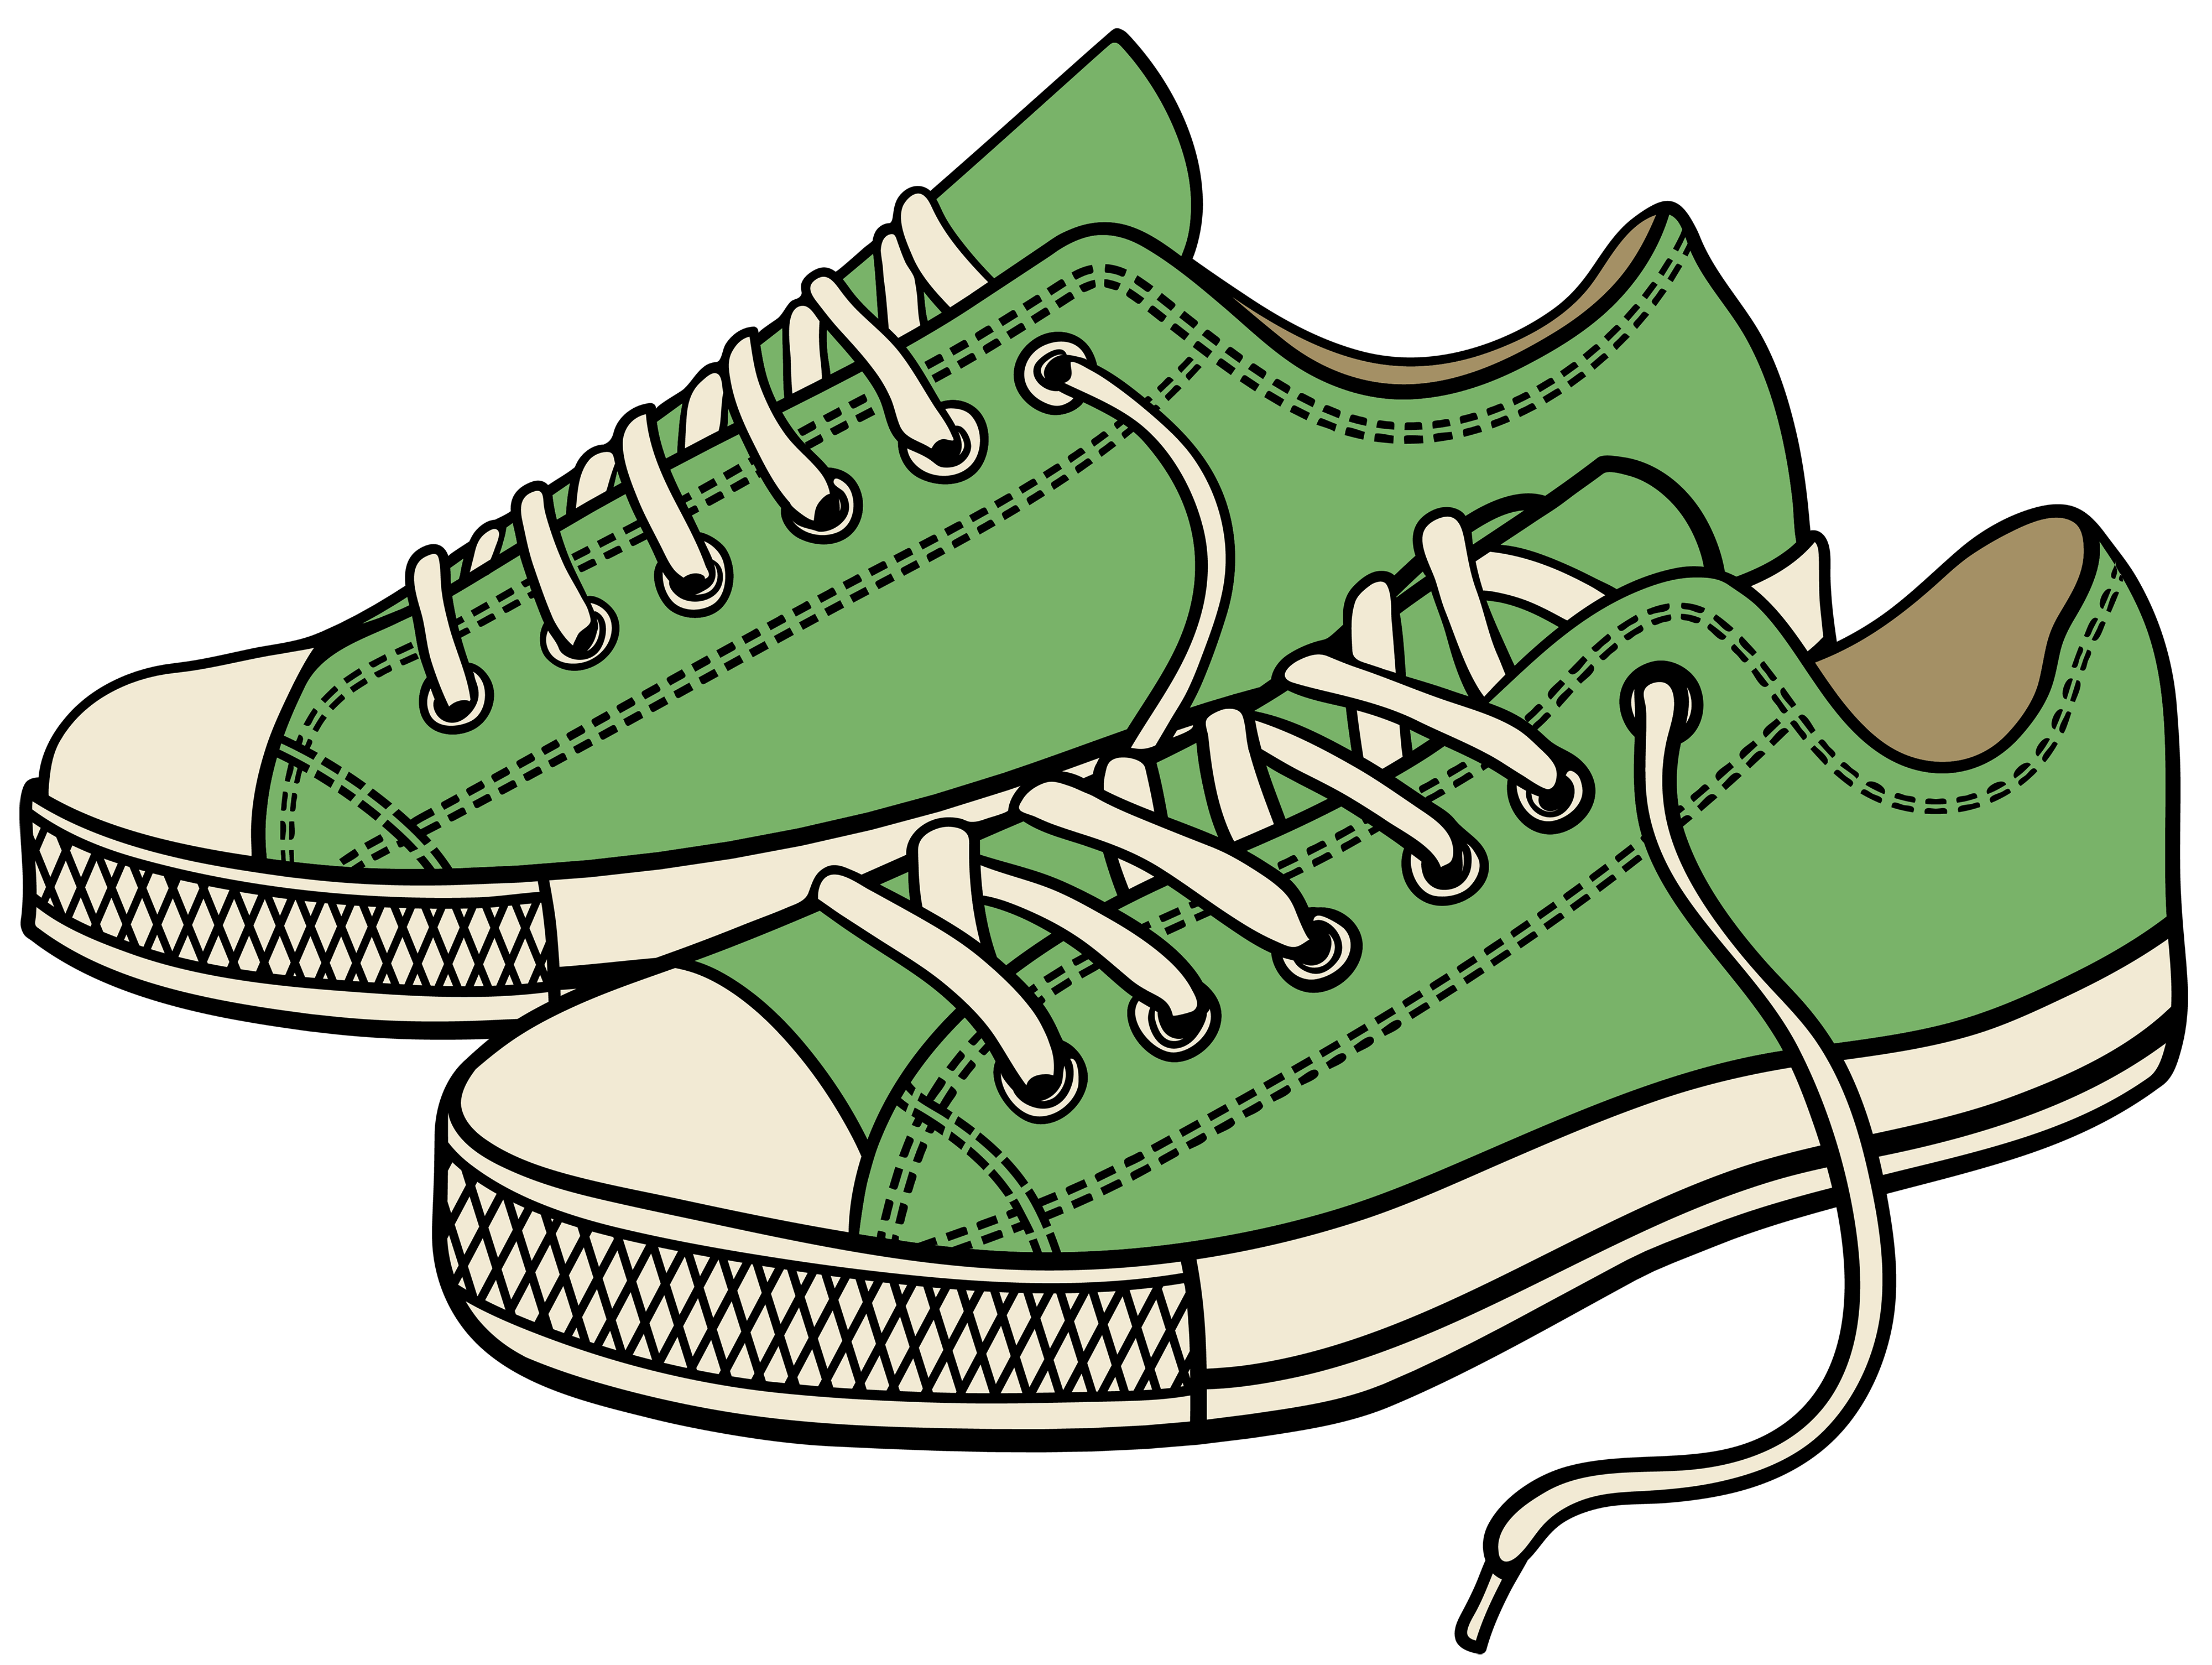 Tennis Shoes Cartoon Images : Converse Clipart Shoe Tennis Converse ...